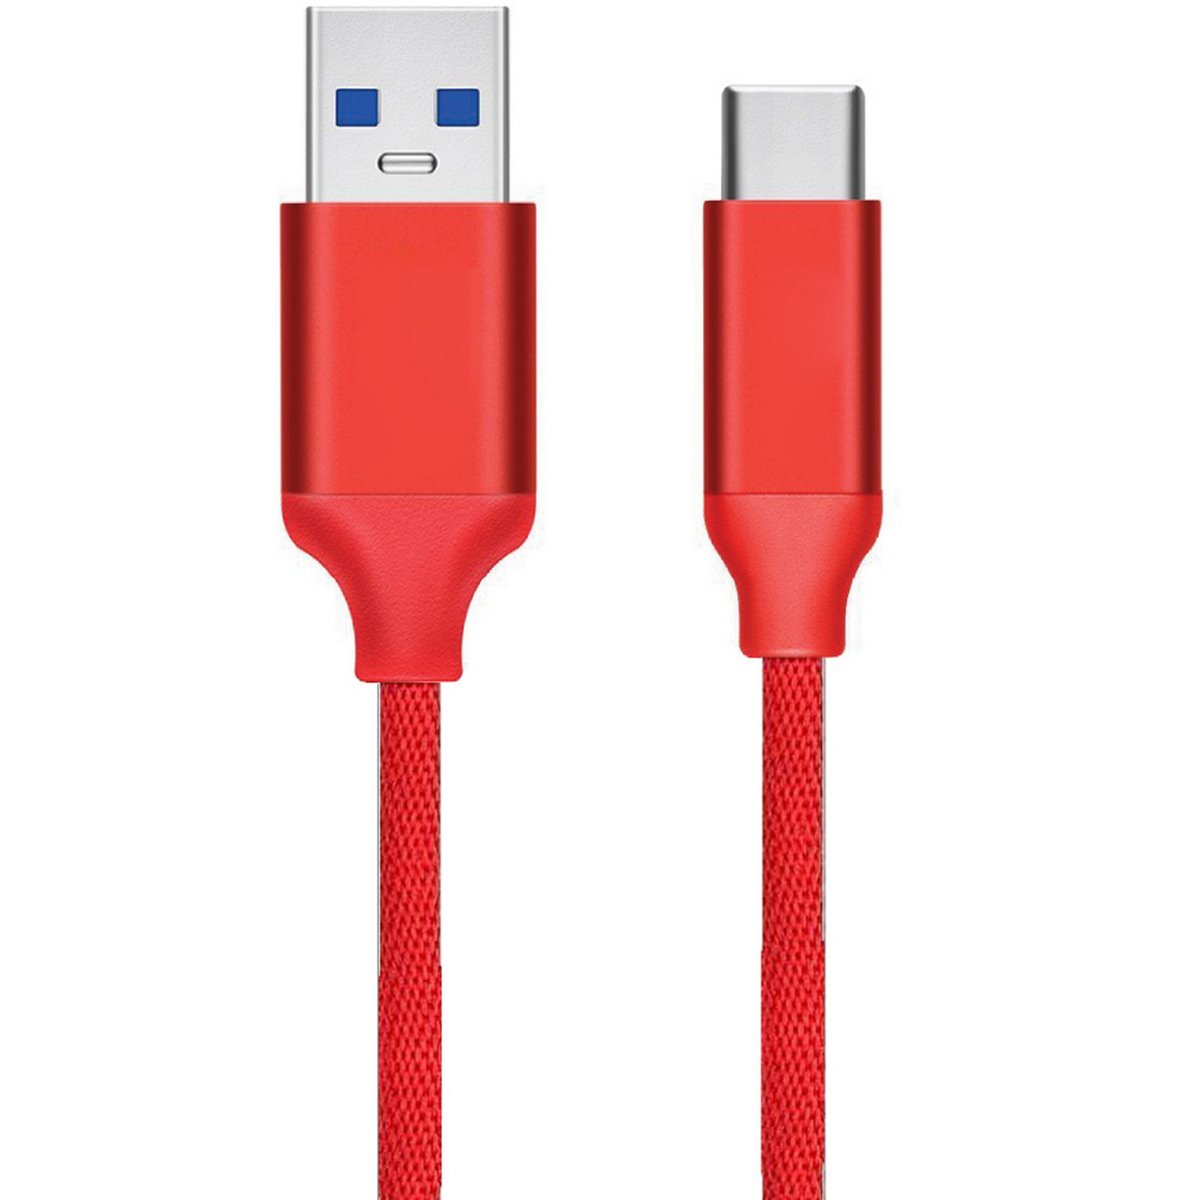 I Smart Type-C USB Cable M9 PLUS 1.2M